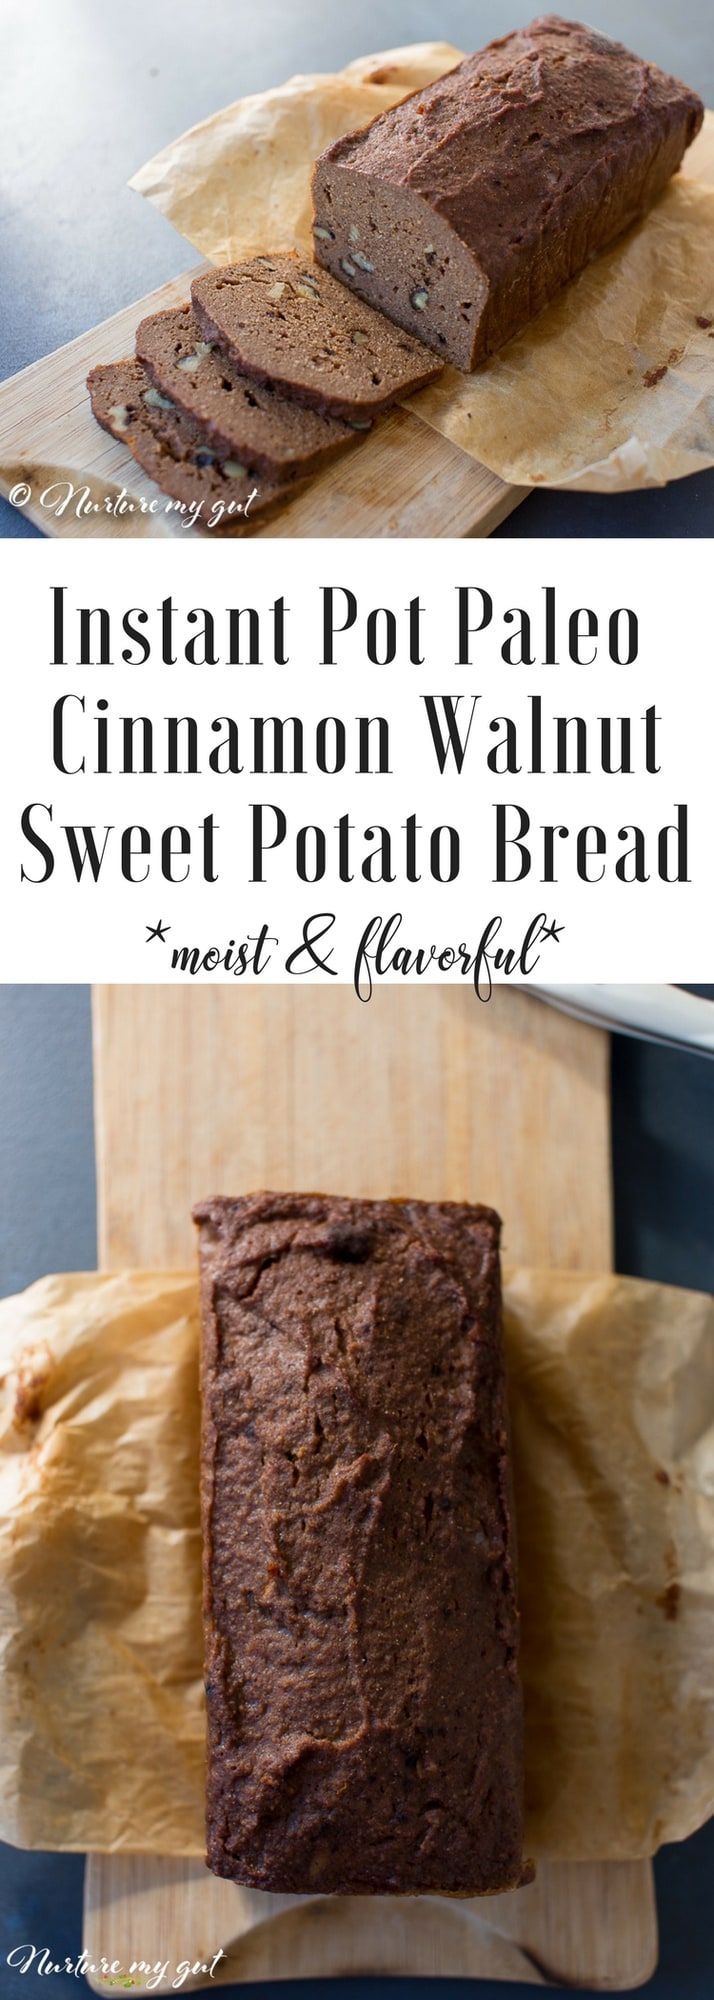 Instant Pot Paleo Cinnamon Walnut Sweet Potato Bread